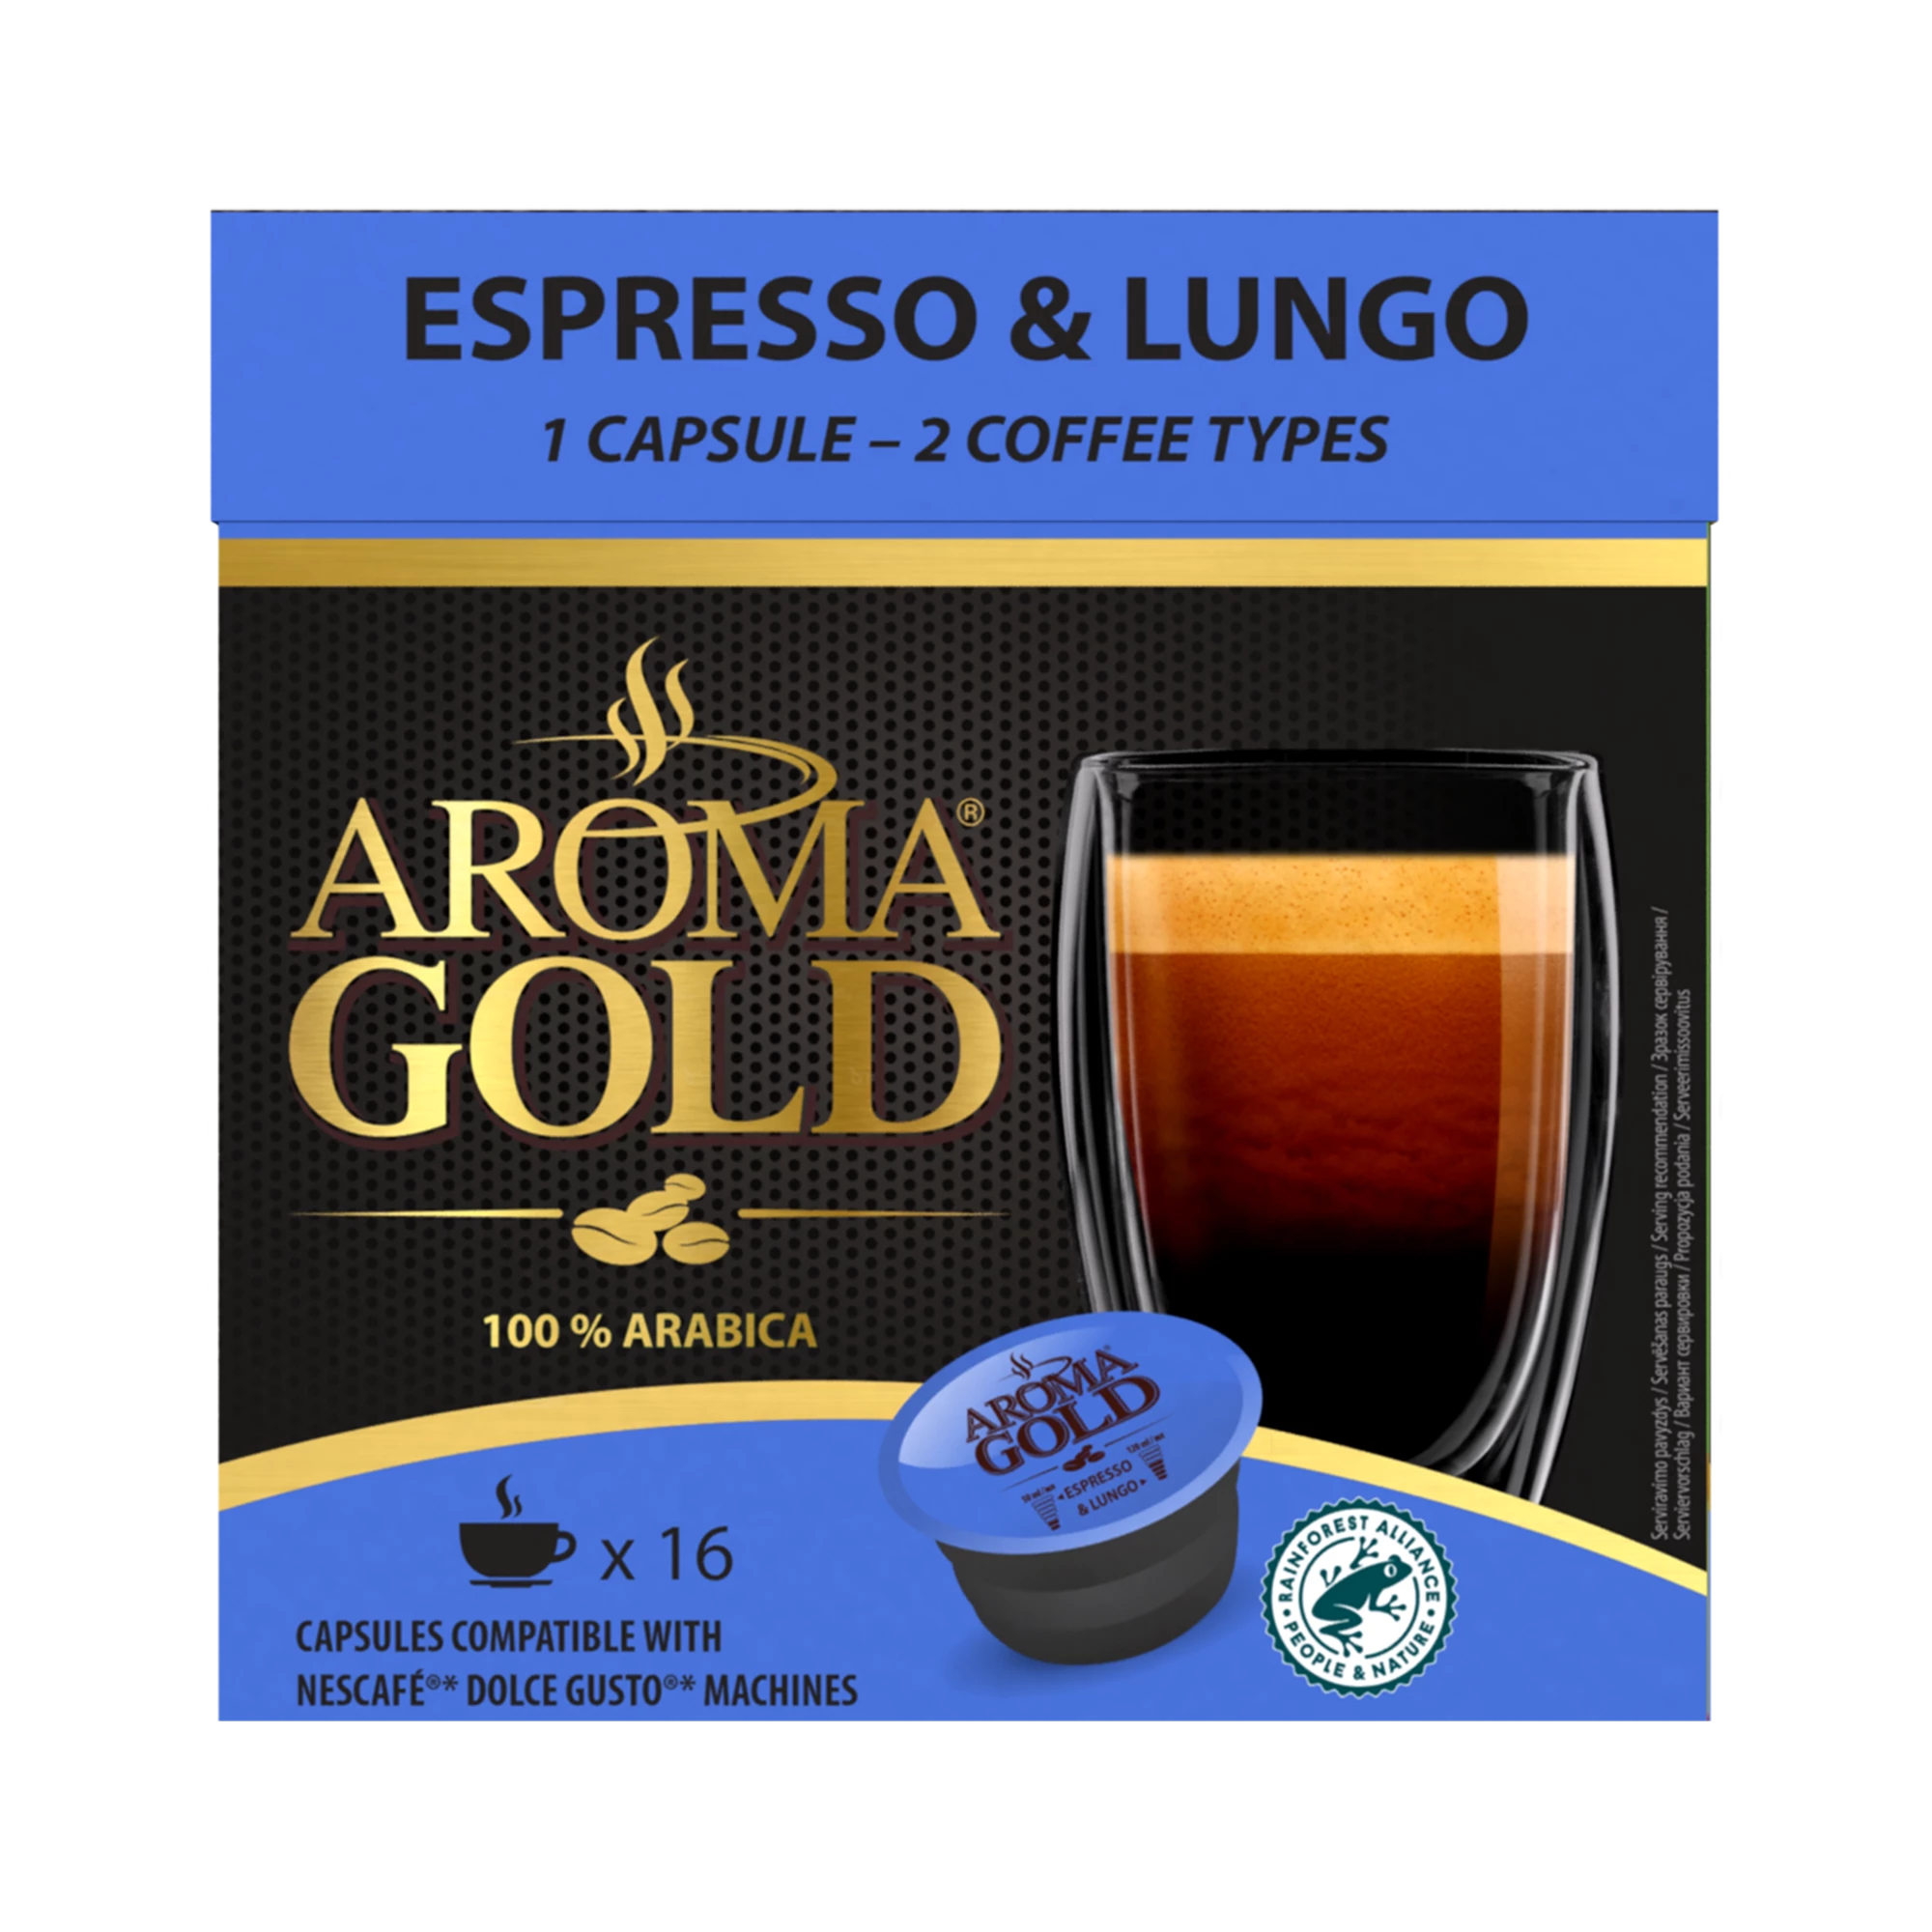 Совместимость с Café Espresso & Lungo Dolce Gusto X 16, 100% арабика — Aroma Gold